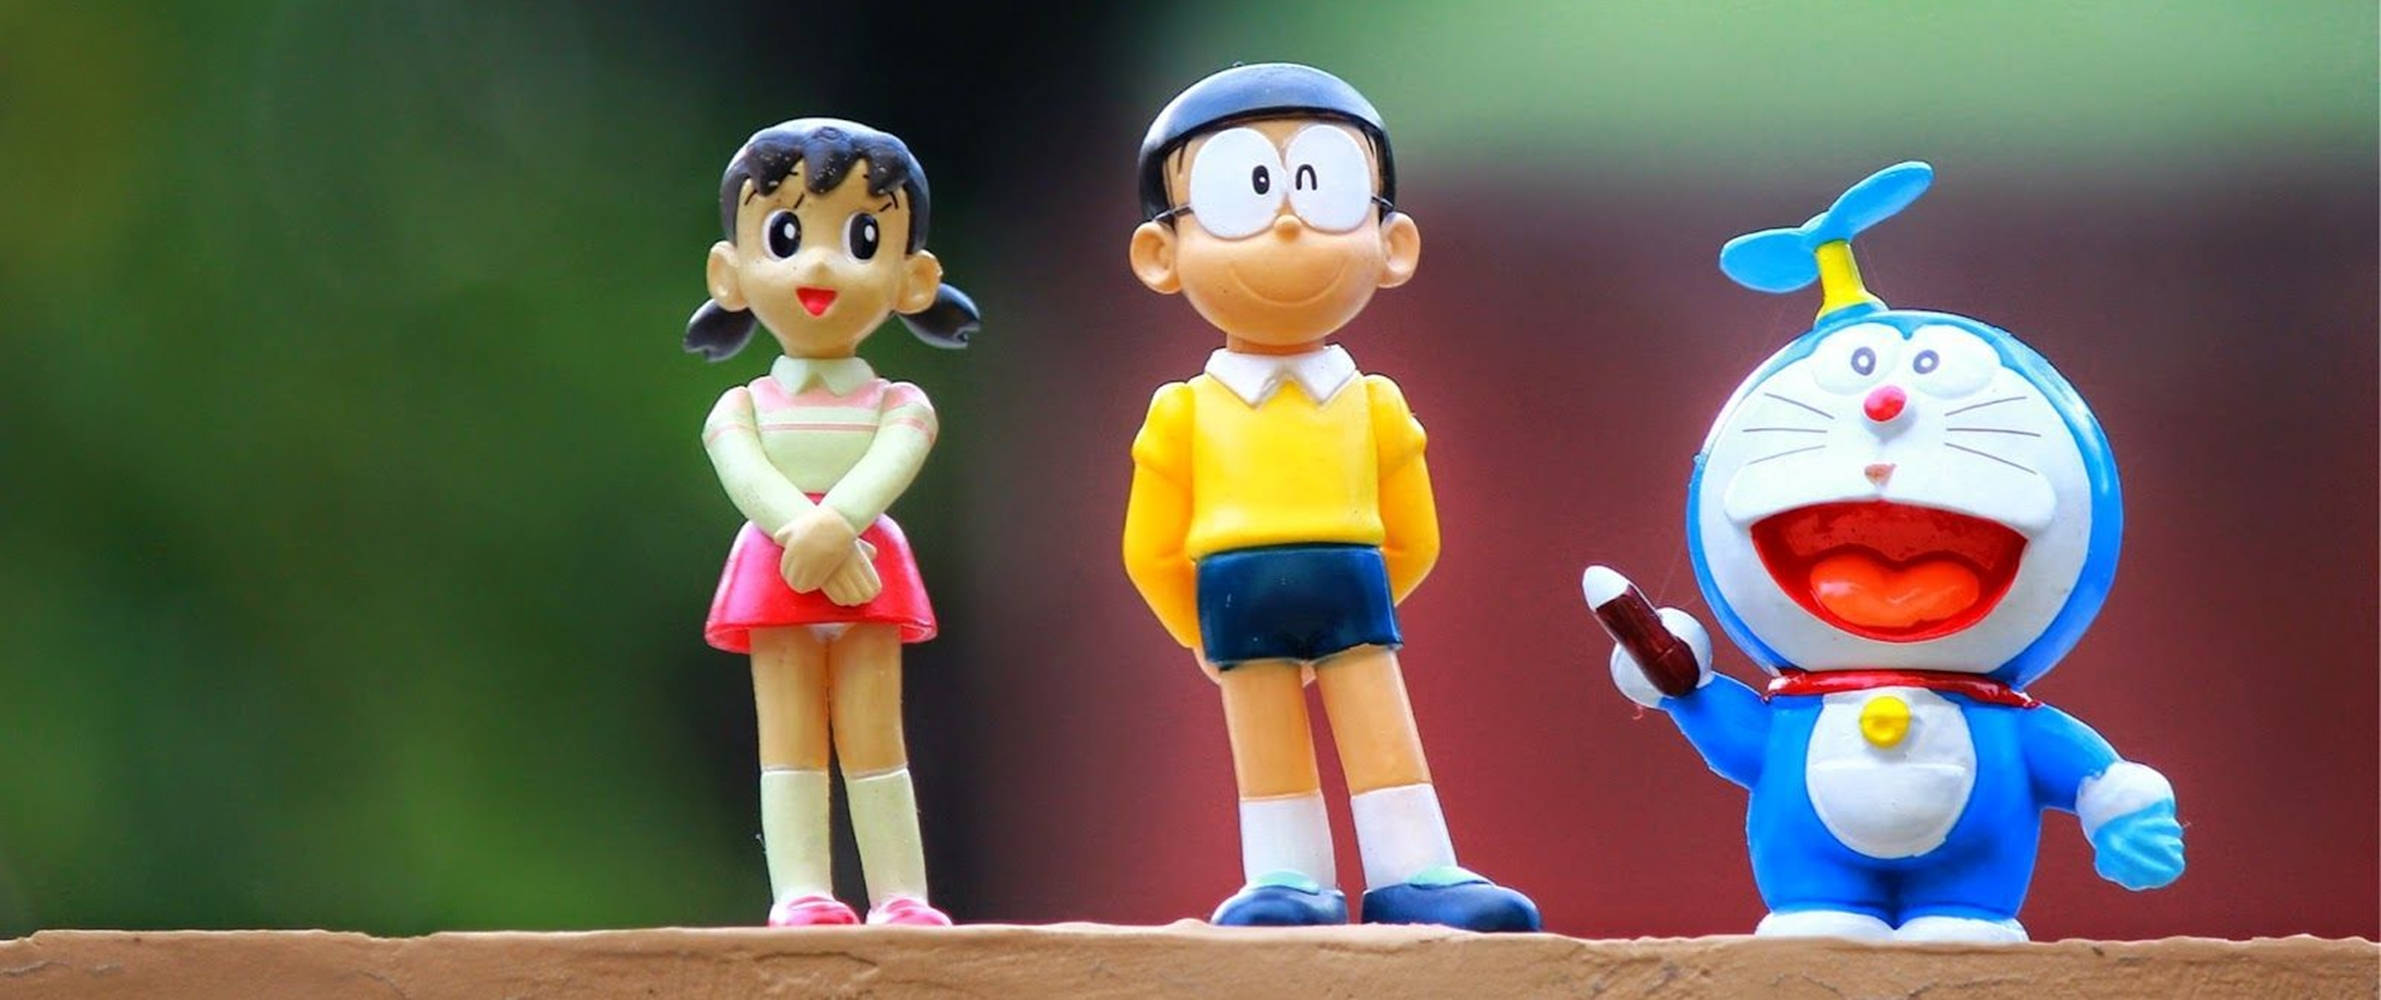 Adorable Action Figure Nobita Shizuka Background